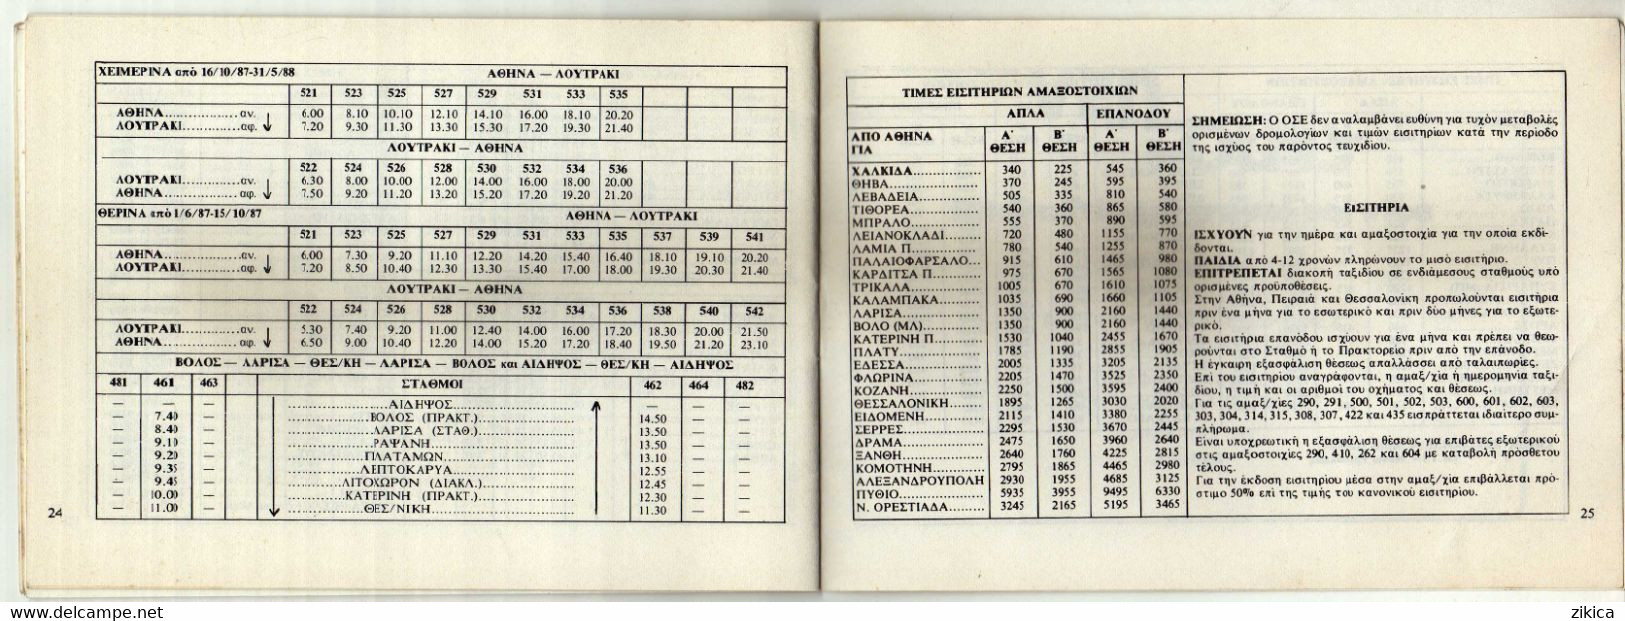 Transportation plan - Greece Railway 1988